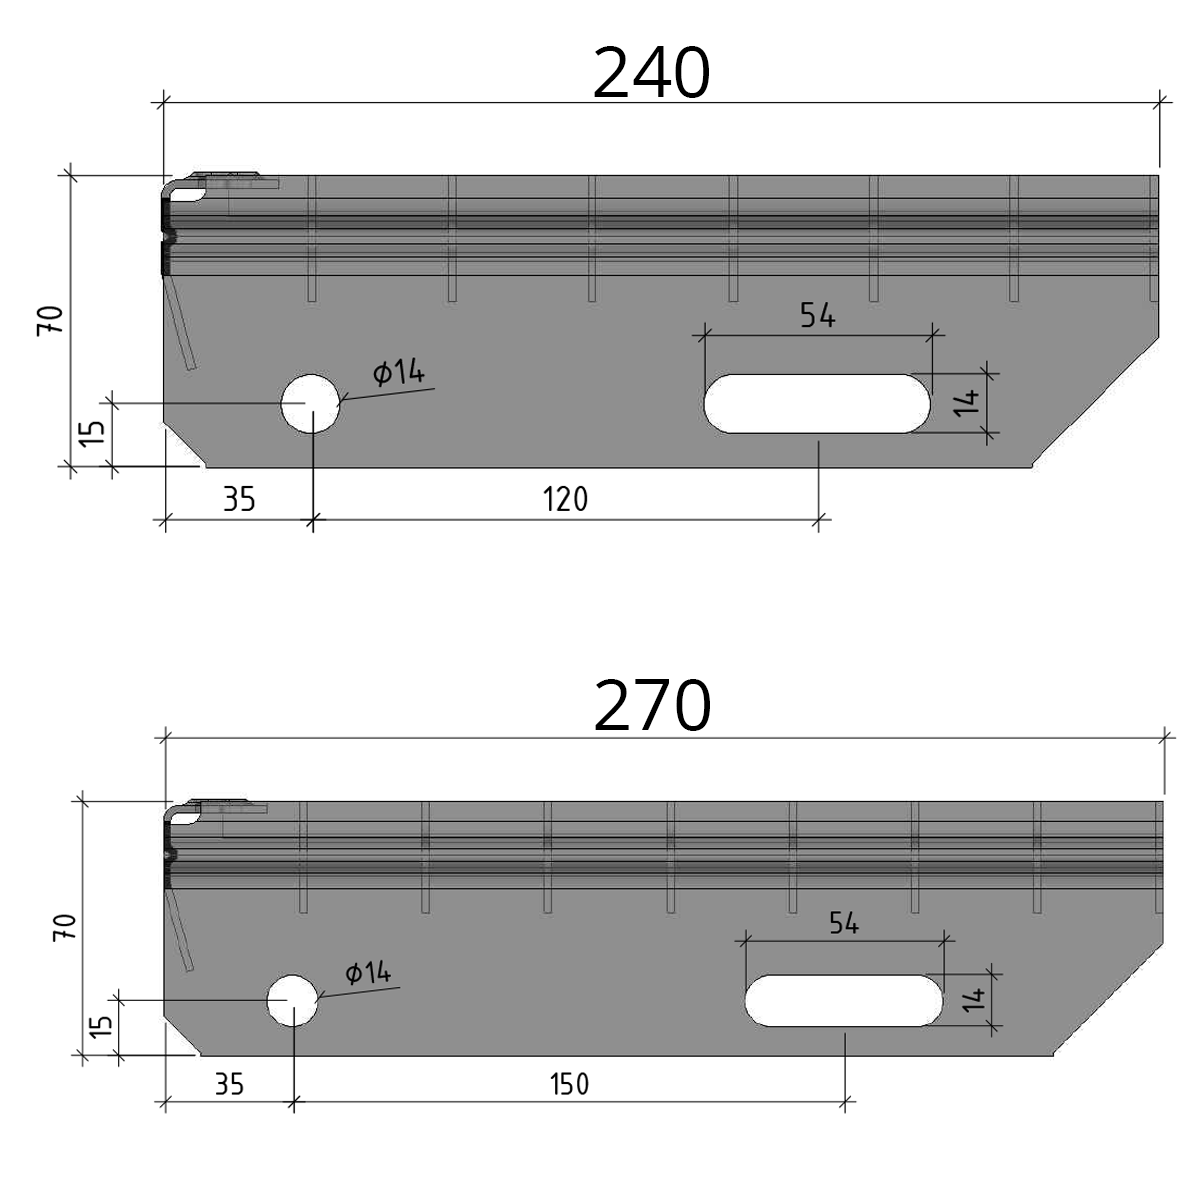 Gitterroststufe Treppenstufe | Maße: 800x240 mm 30/10 mm | S235JR (St37-2), im Vollbad feuerverzinkt